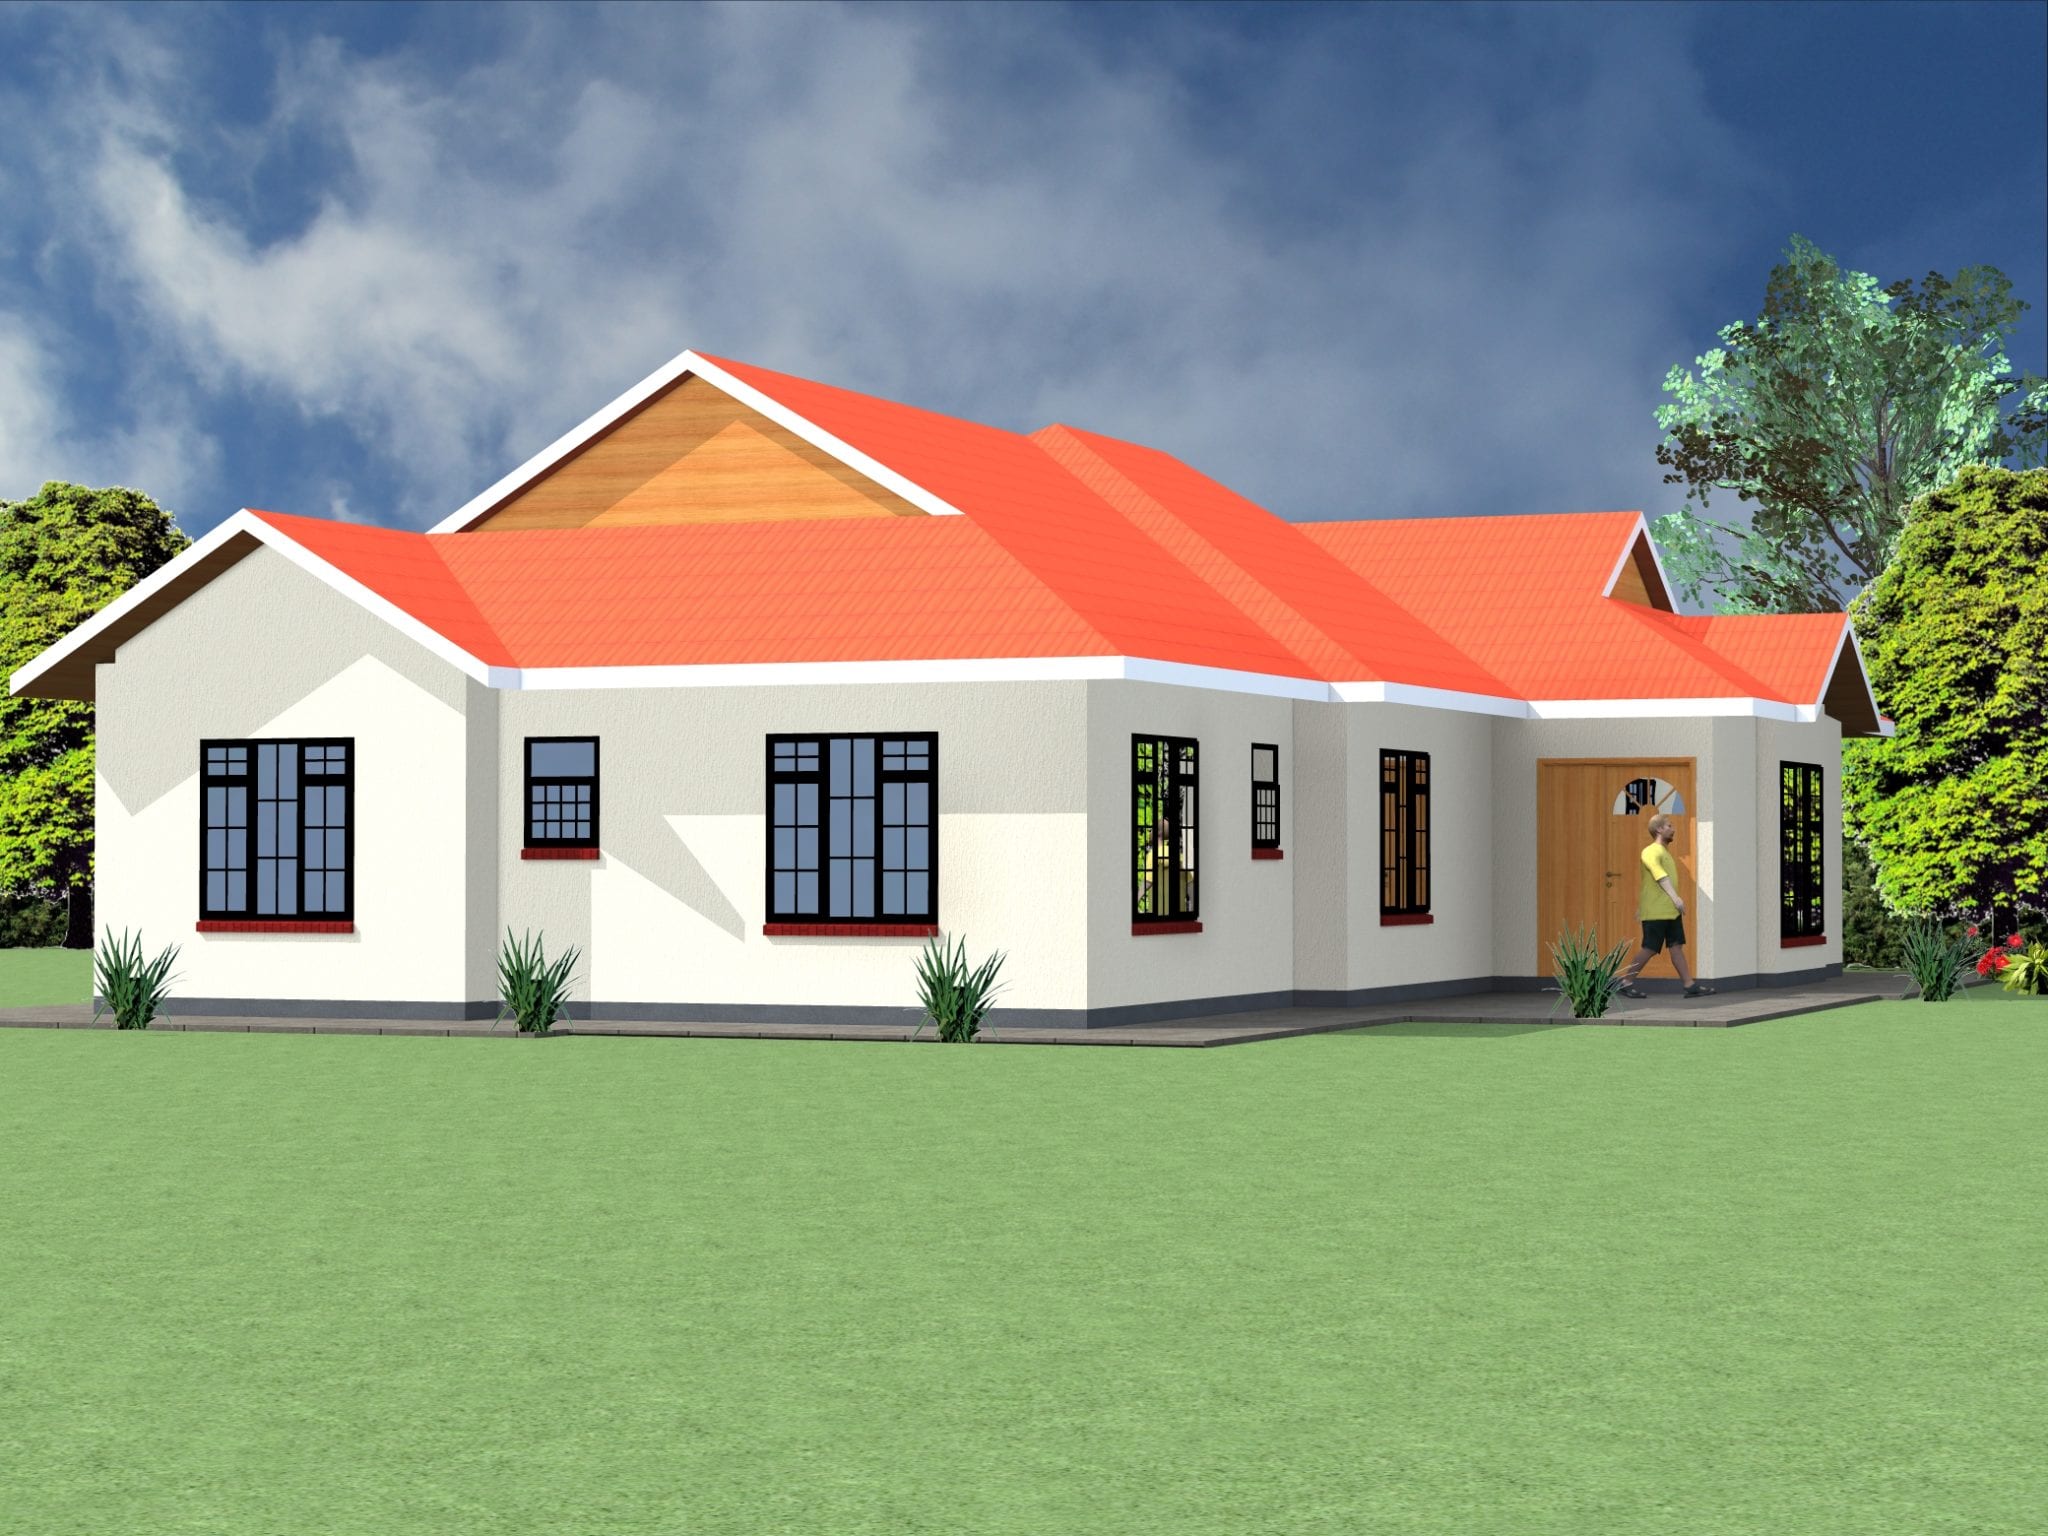 5 Bedroom House Plans Designs In Kenya Hpd Consult